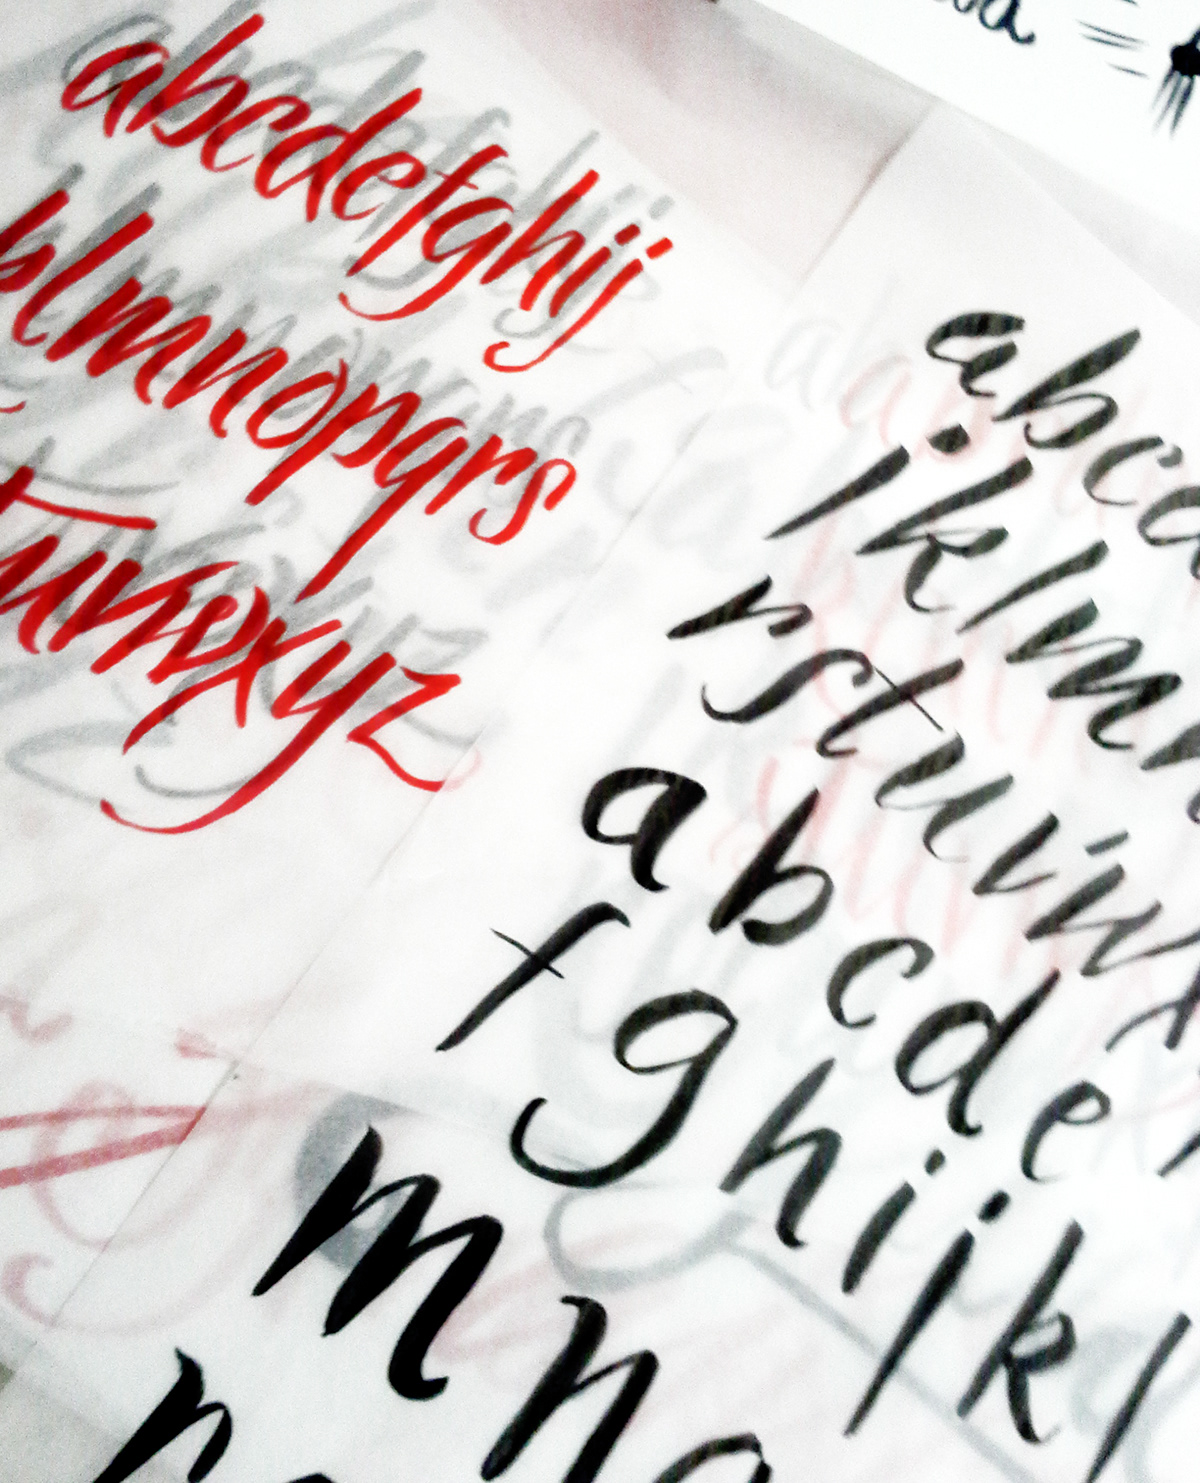 lettering beziers Workshop TicklingBeziers handmade analog vector